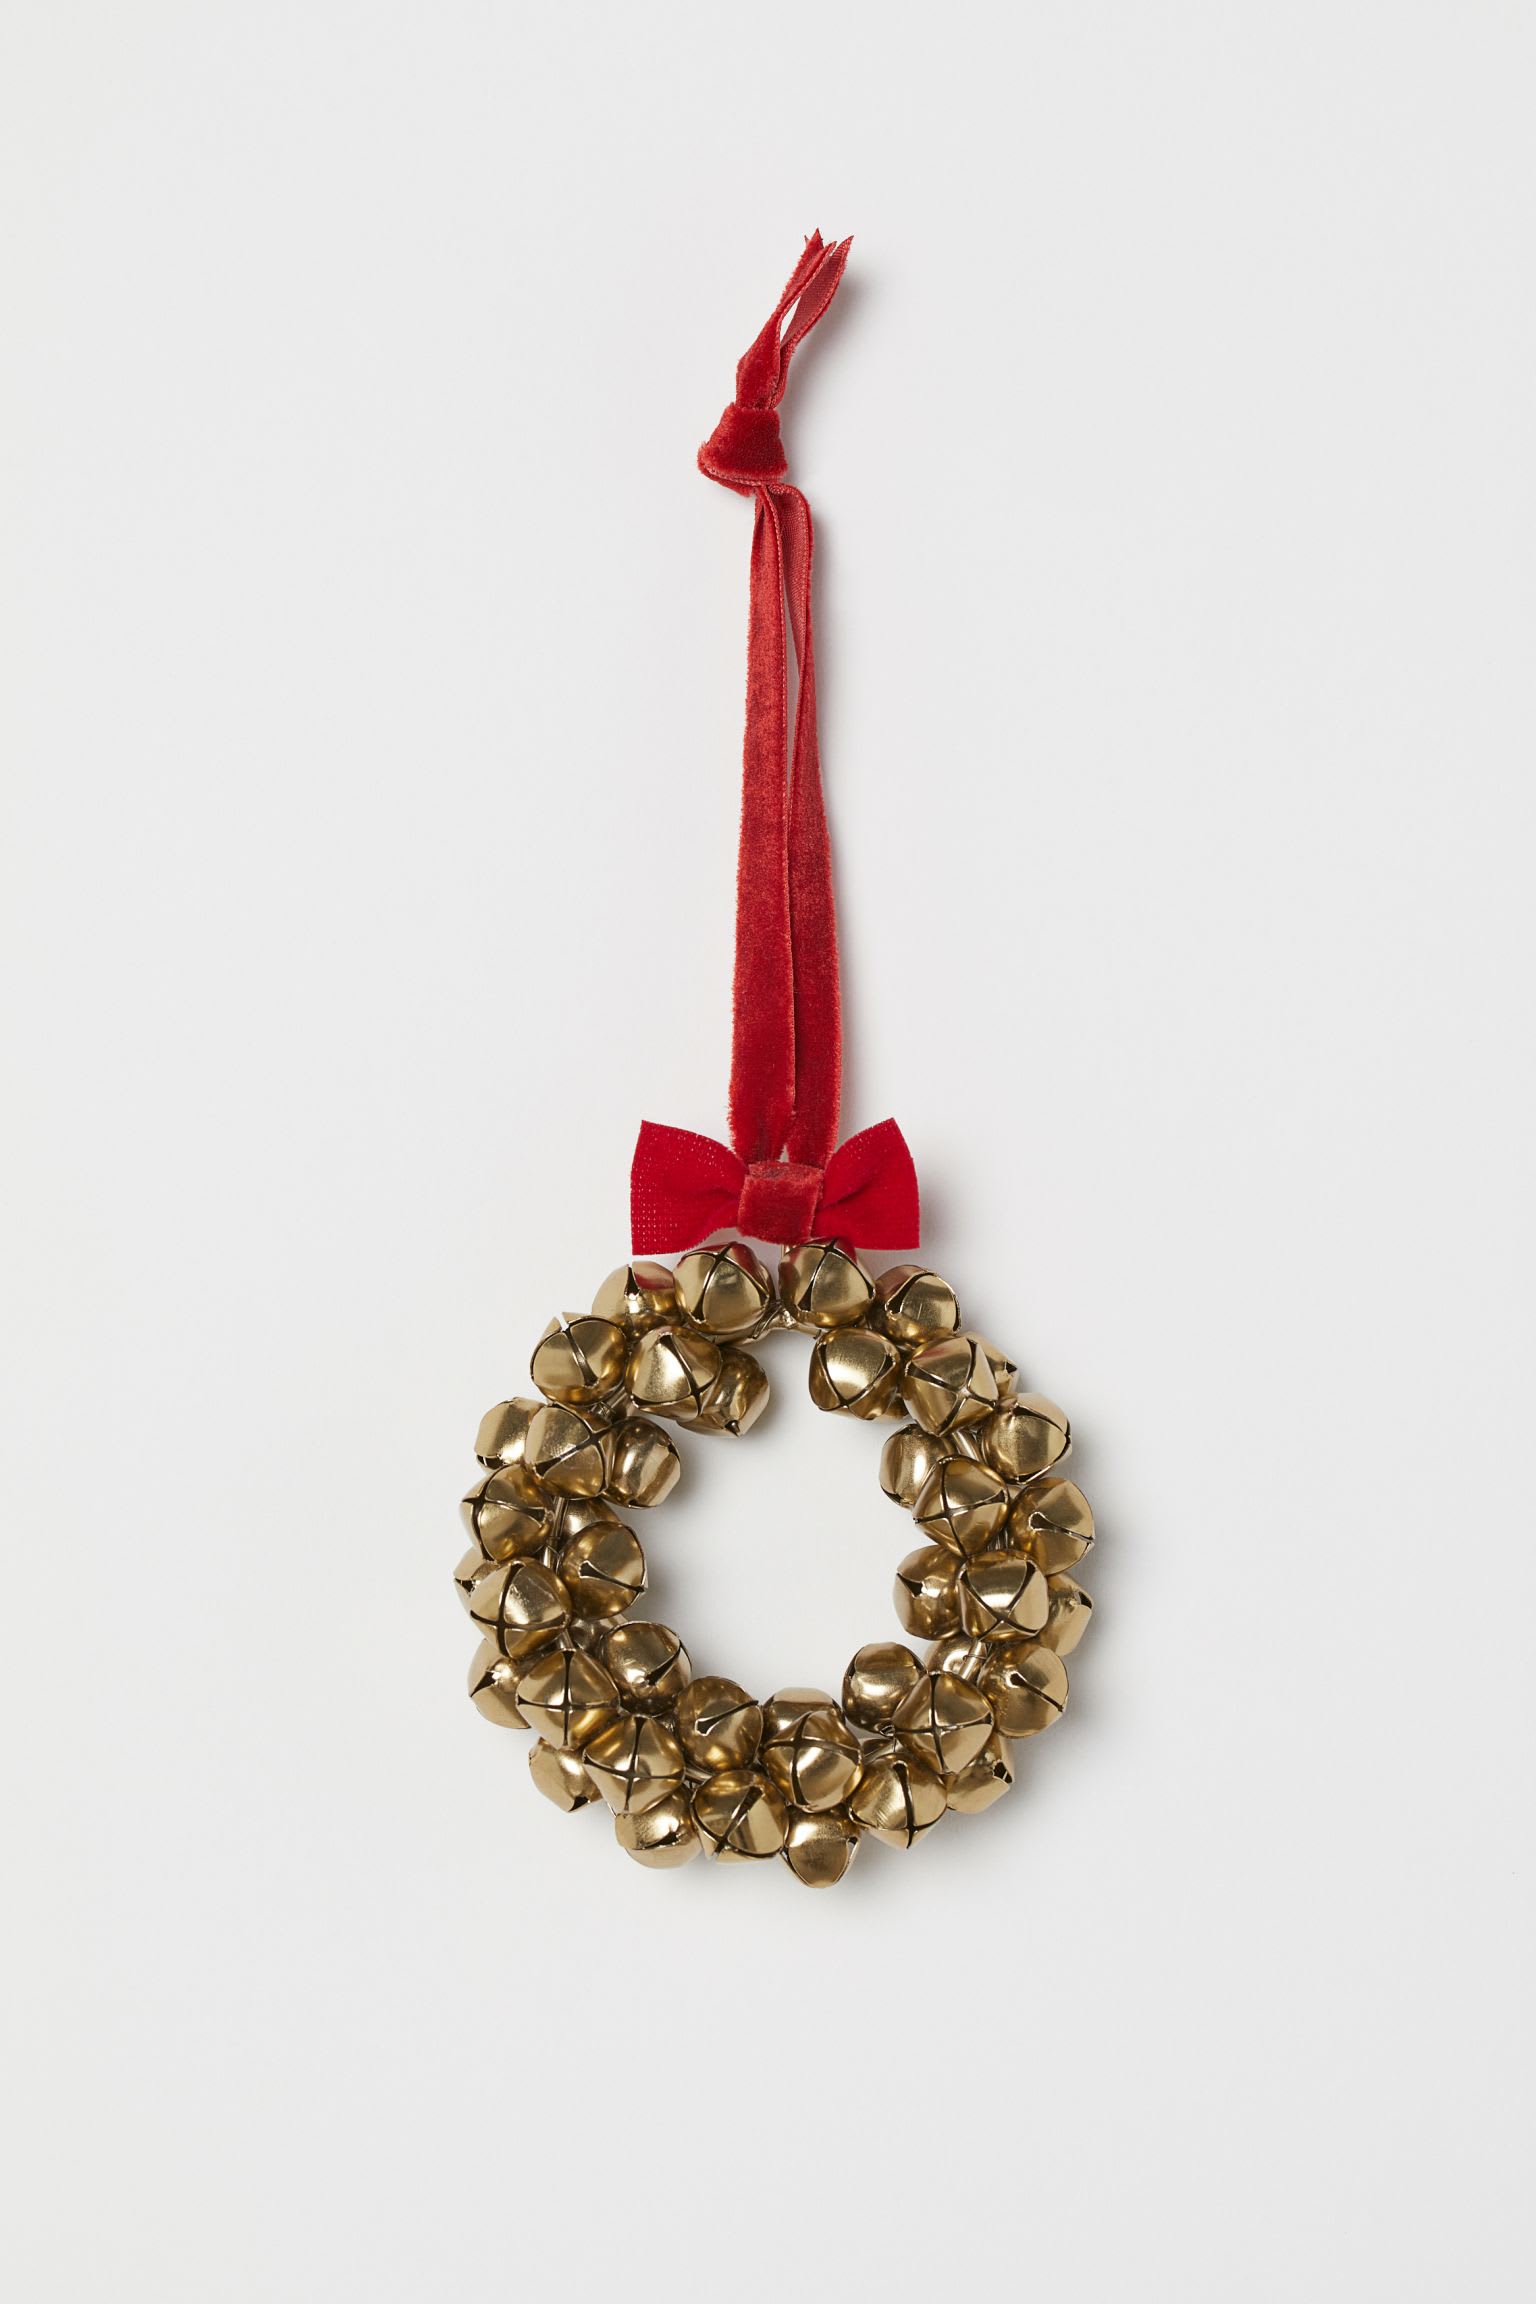 bell wreath ornament  s 14 95 rm34 95  data